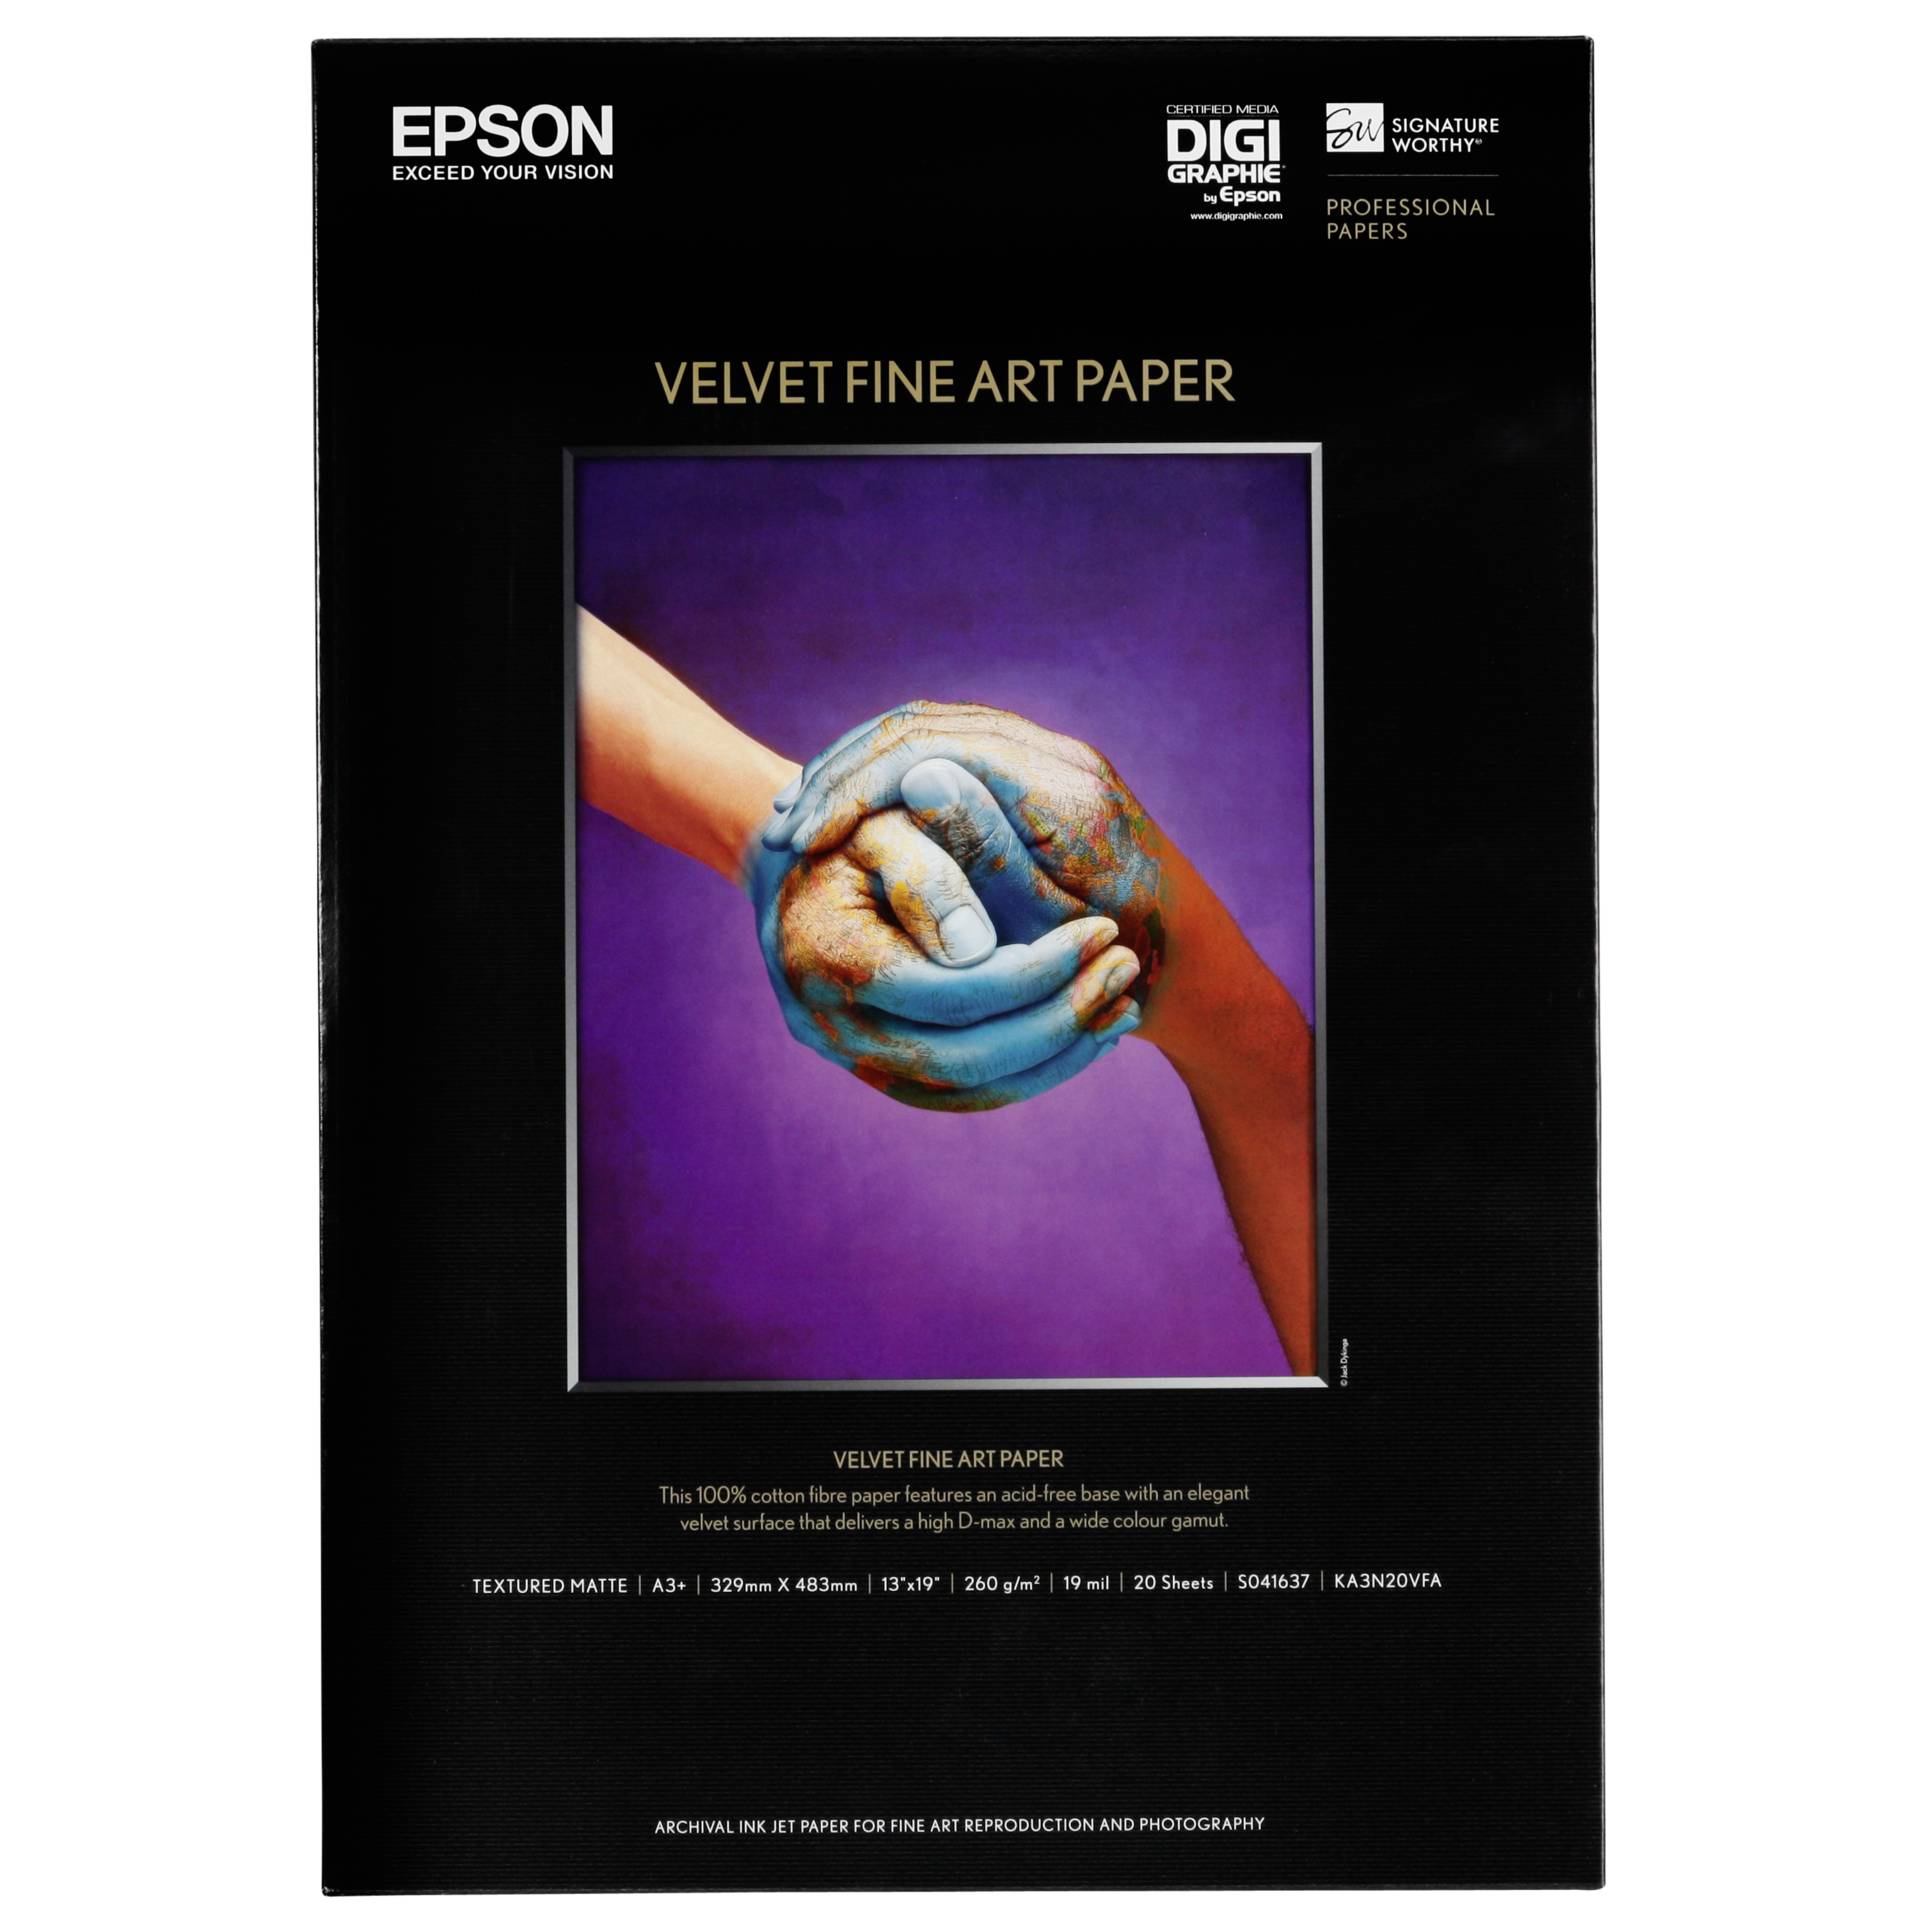 Epson Velvet Fine Art carta A 3+ 20 fogli, 260 g         S 0